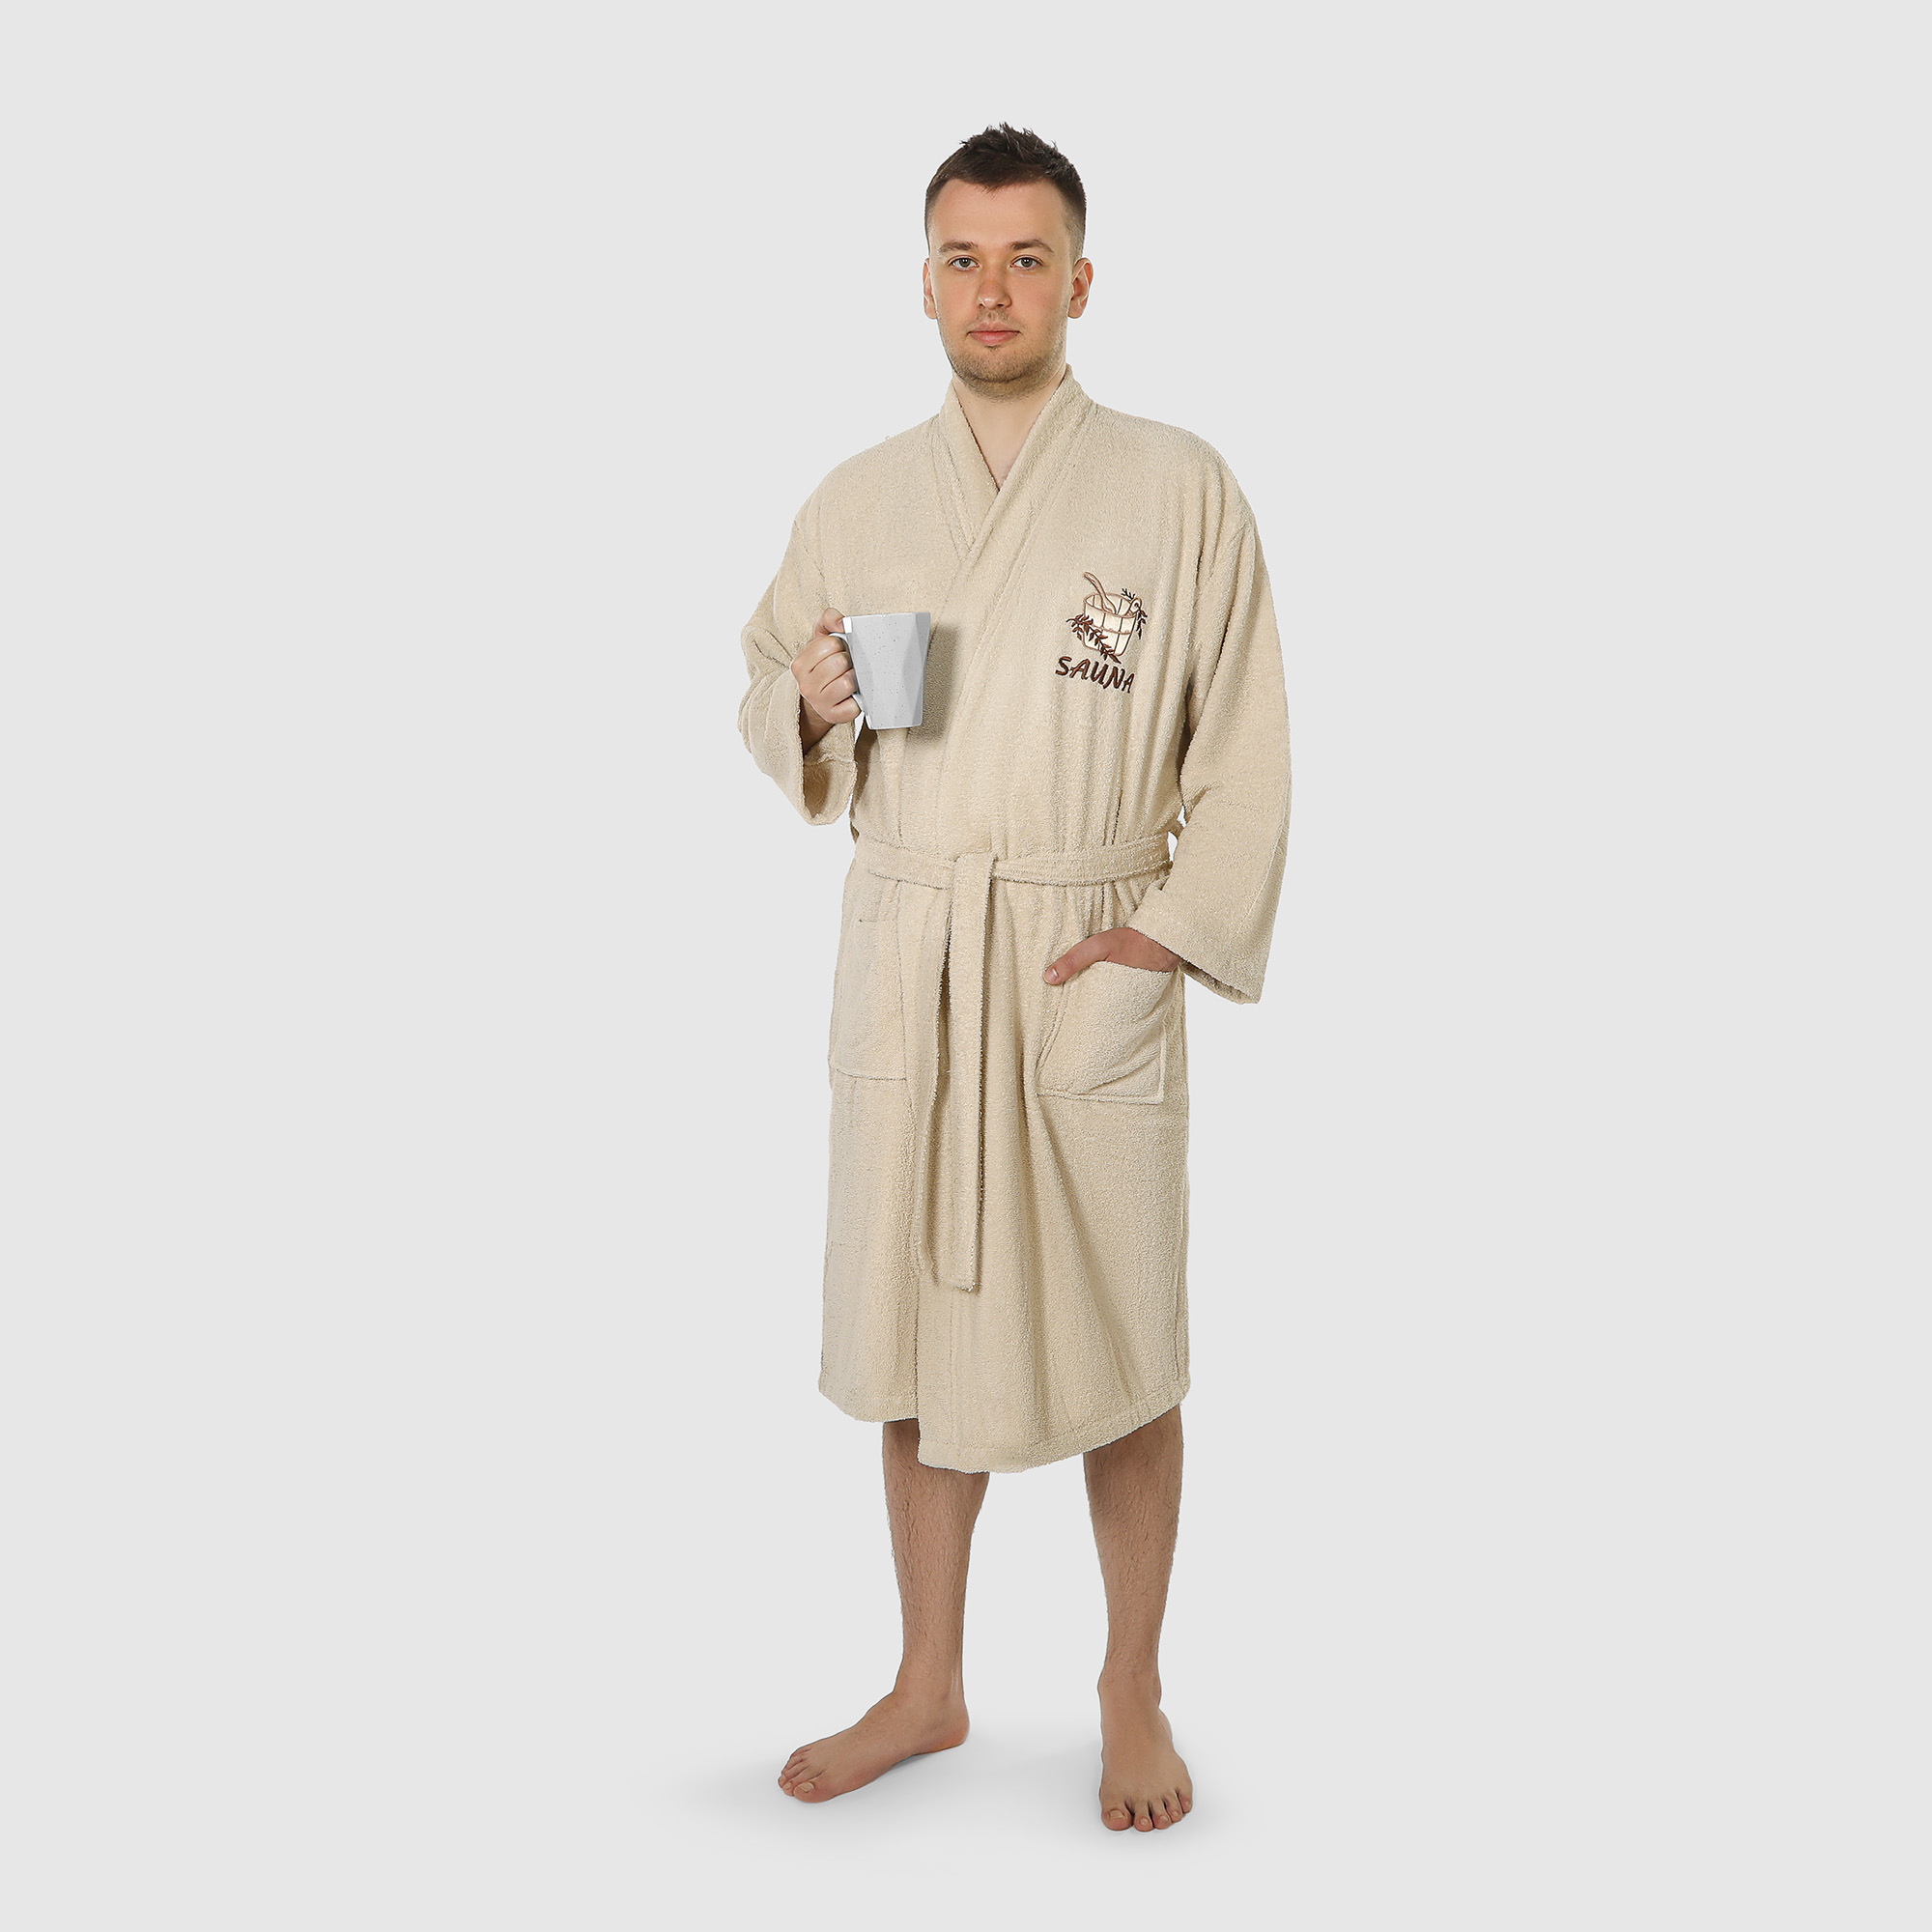 Халат мужской махровый Asil Sauna Kimono brown XL халат мужской asil sauna brown xl вафельный с капюшоном